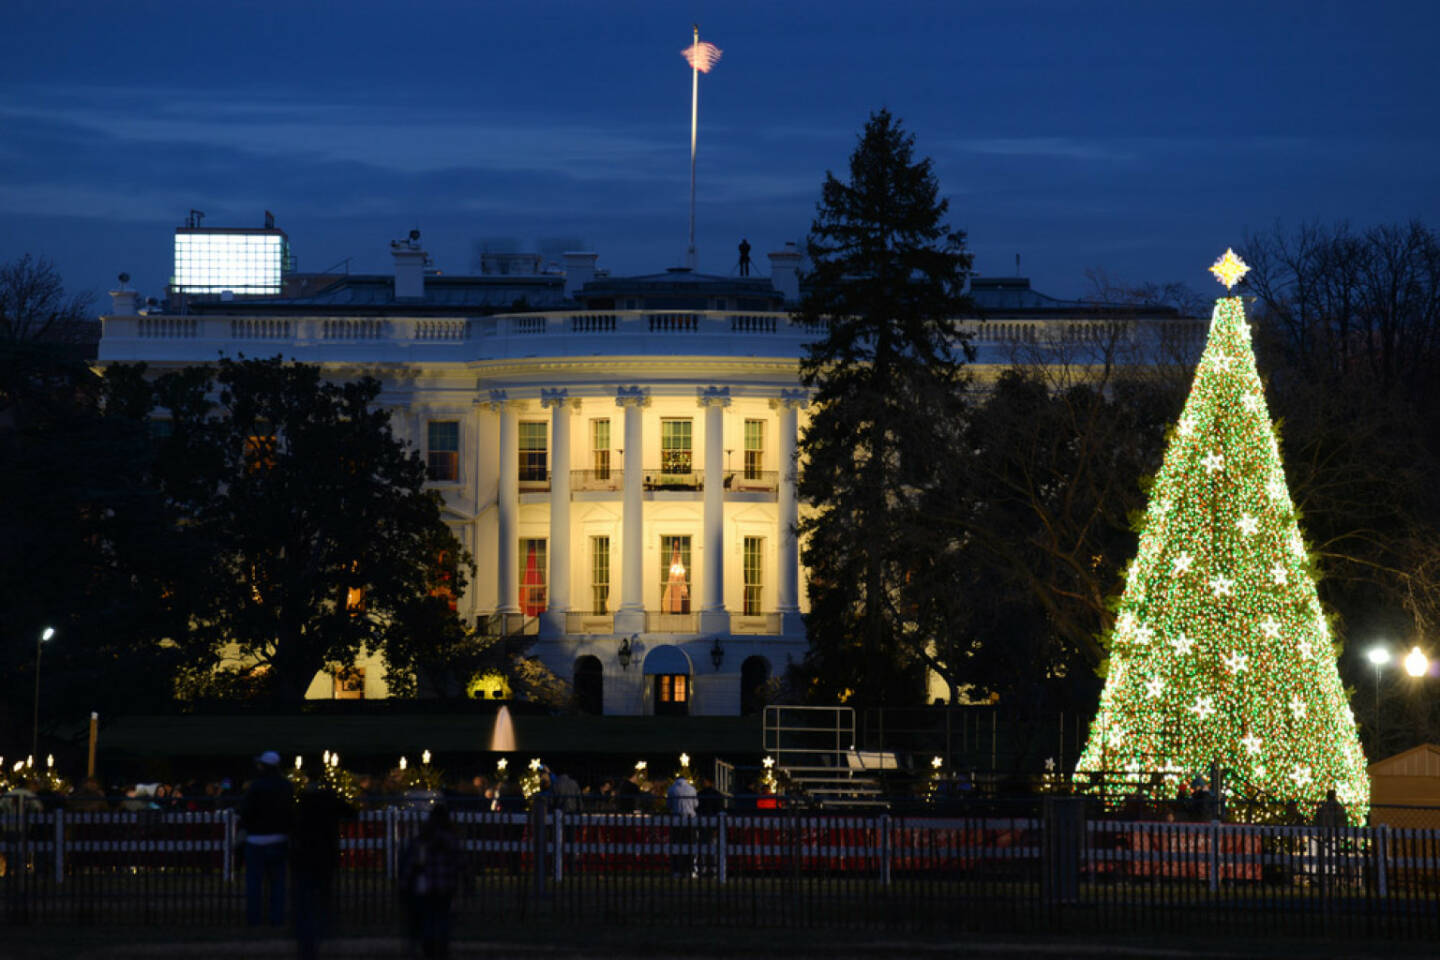 Weihnachten, USA; Washington, Weisses Haus, Christbaum, Weihnachtsbaum, Beleuchtung, http://www.shutterstock.com/de/pic-152126825/stock-photo-the-white-house-in-christmas-washington-dc-united-states.html